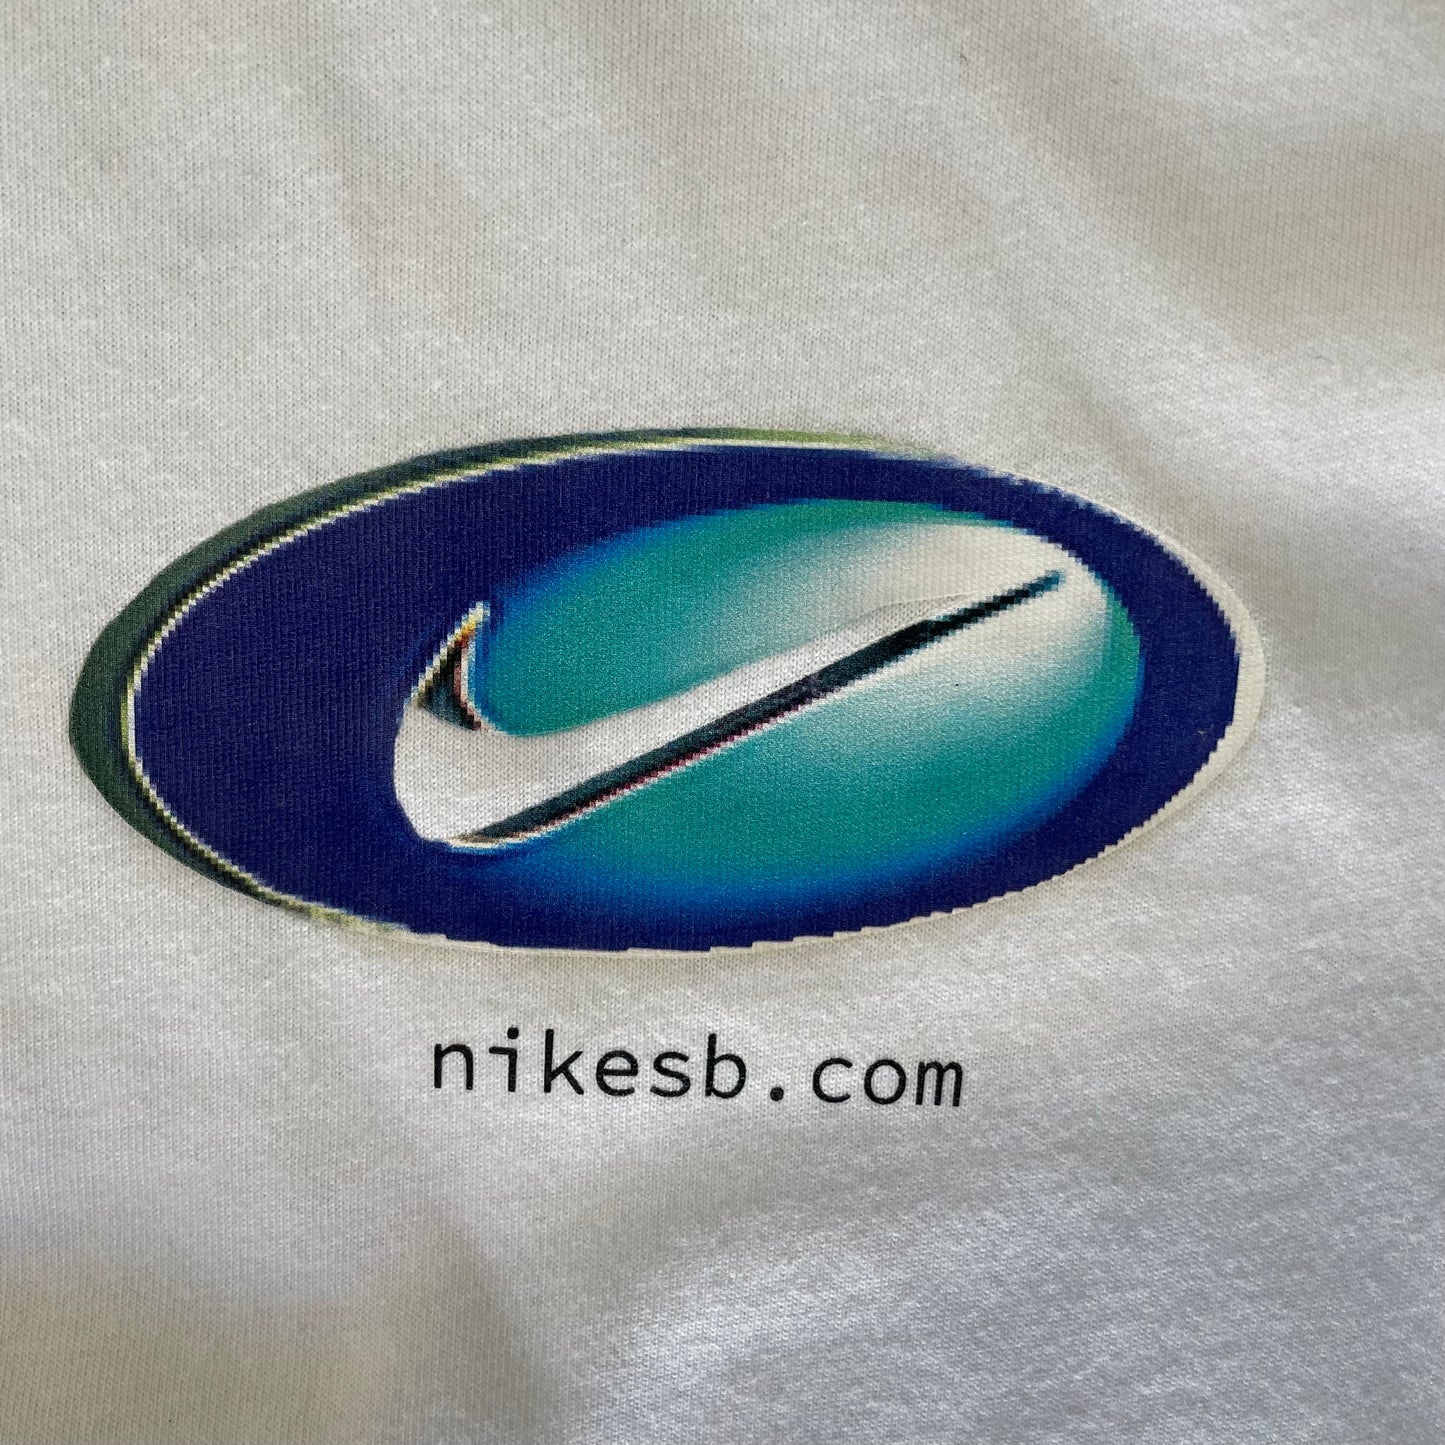 Nike SB Y2K T-Shirt - White